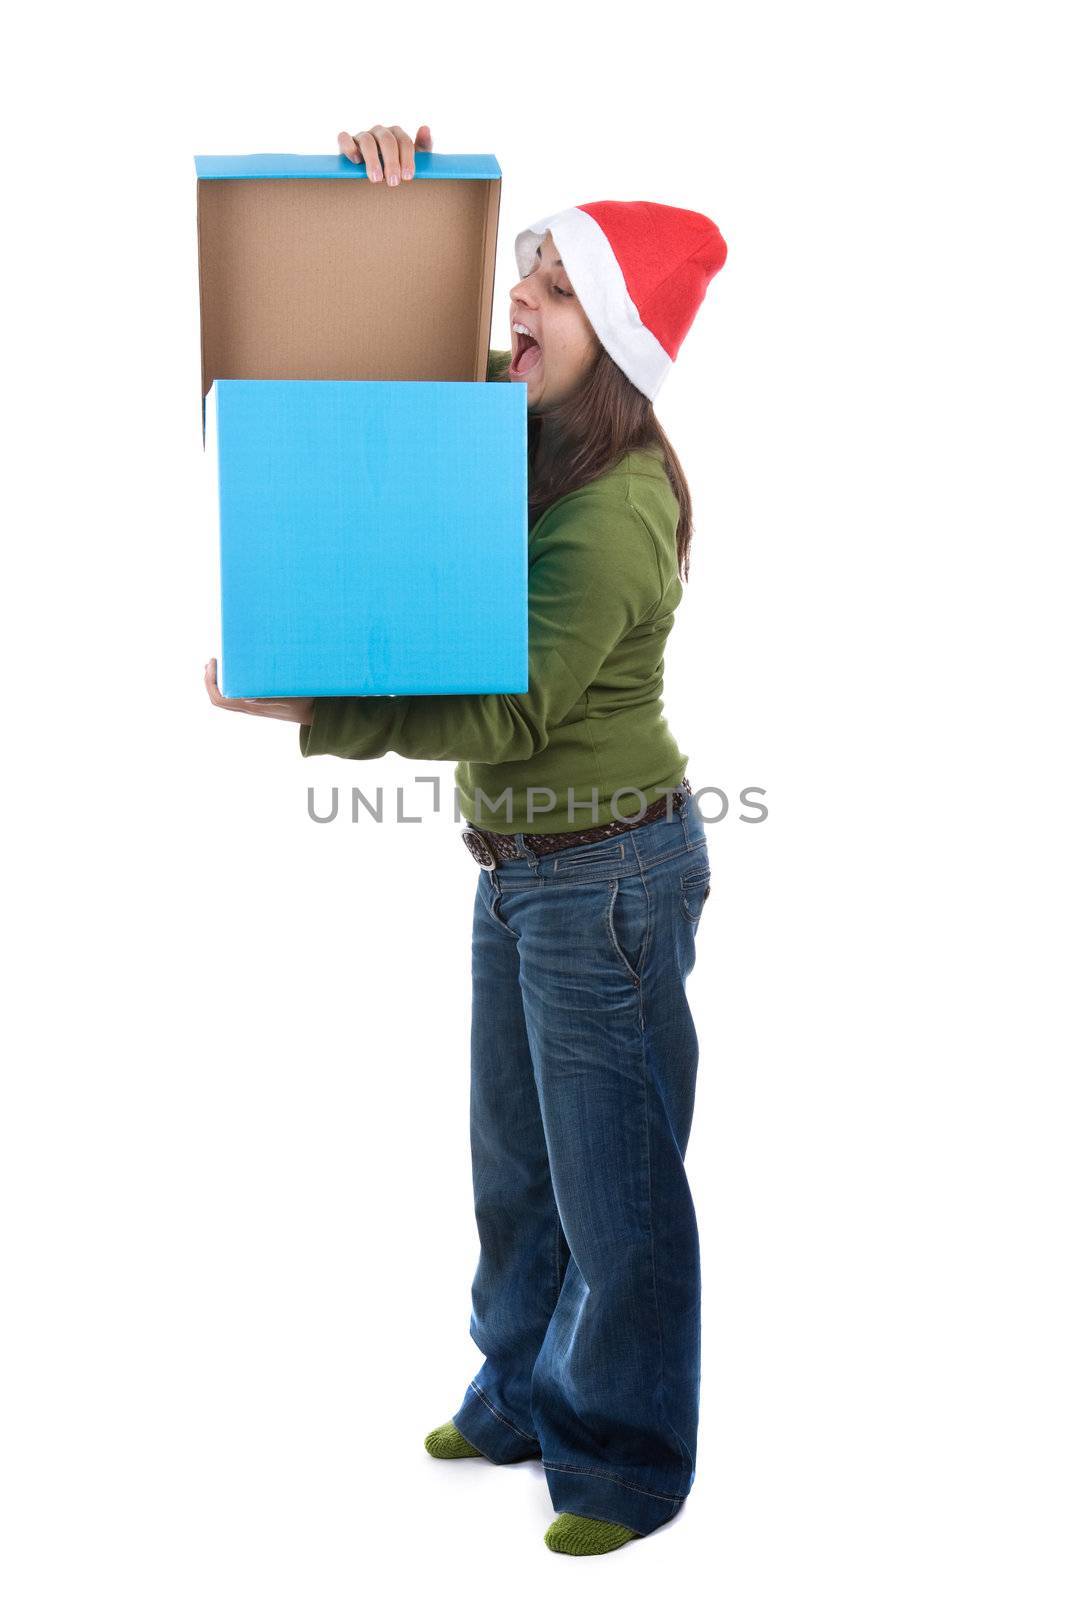 beautiful santa woman celebrating christmas with big blue present box. isolated on white background. portrait orientation.